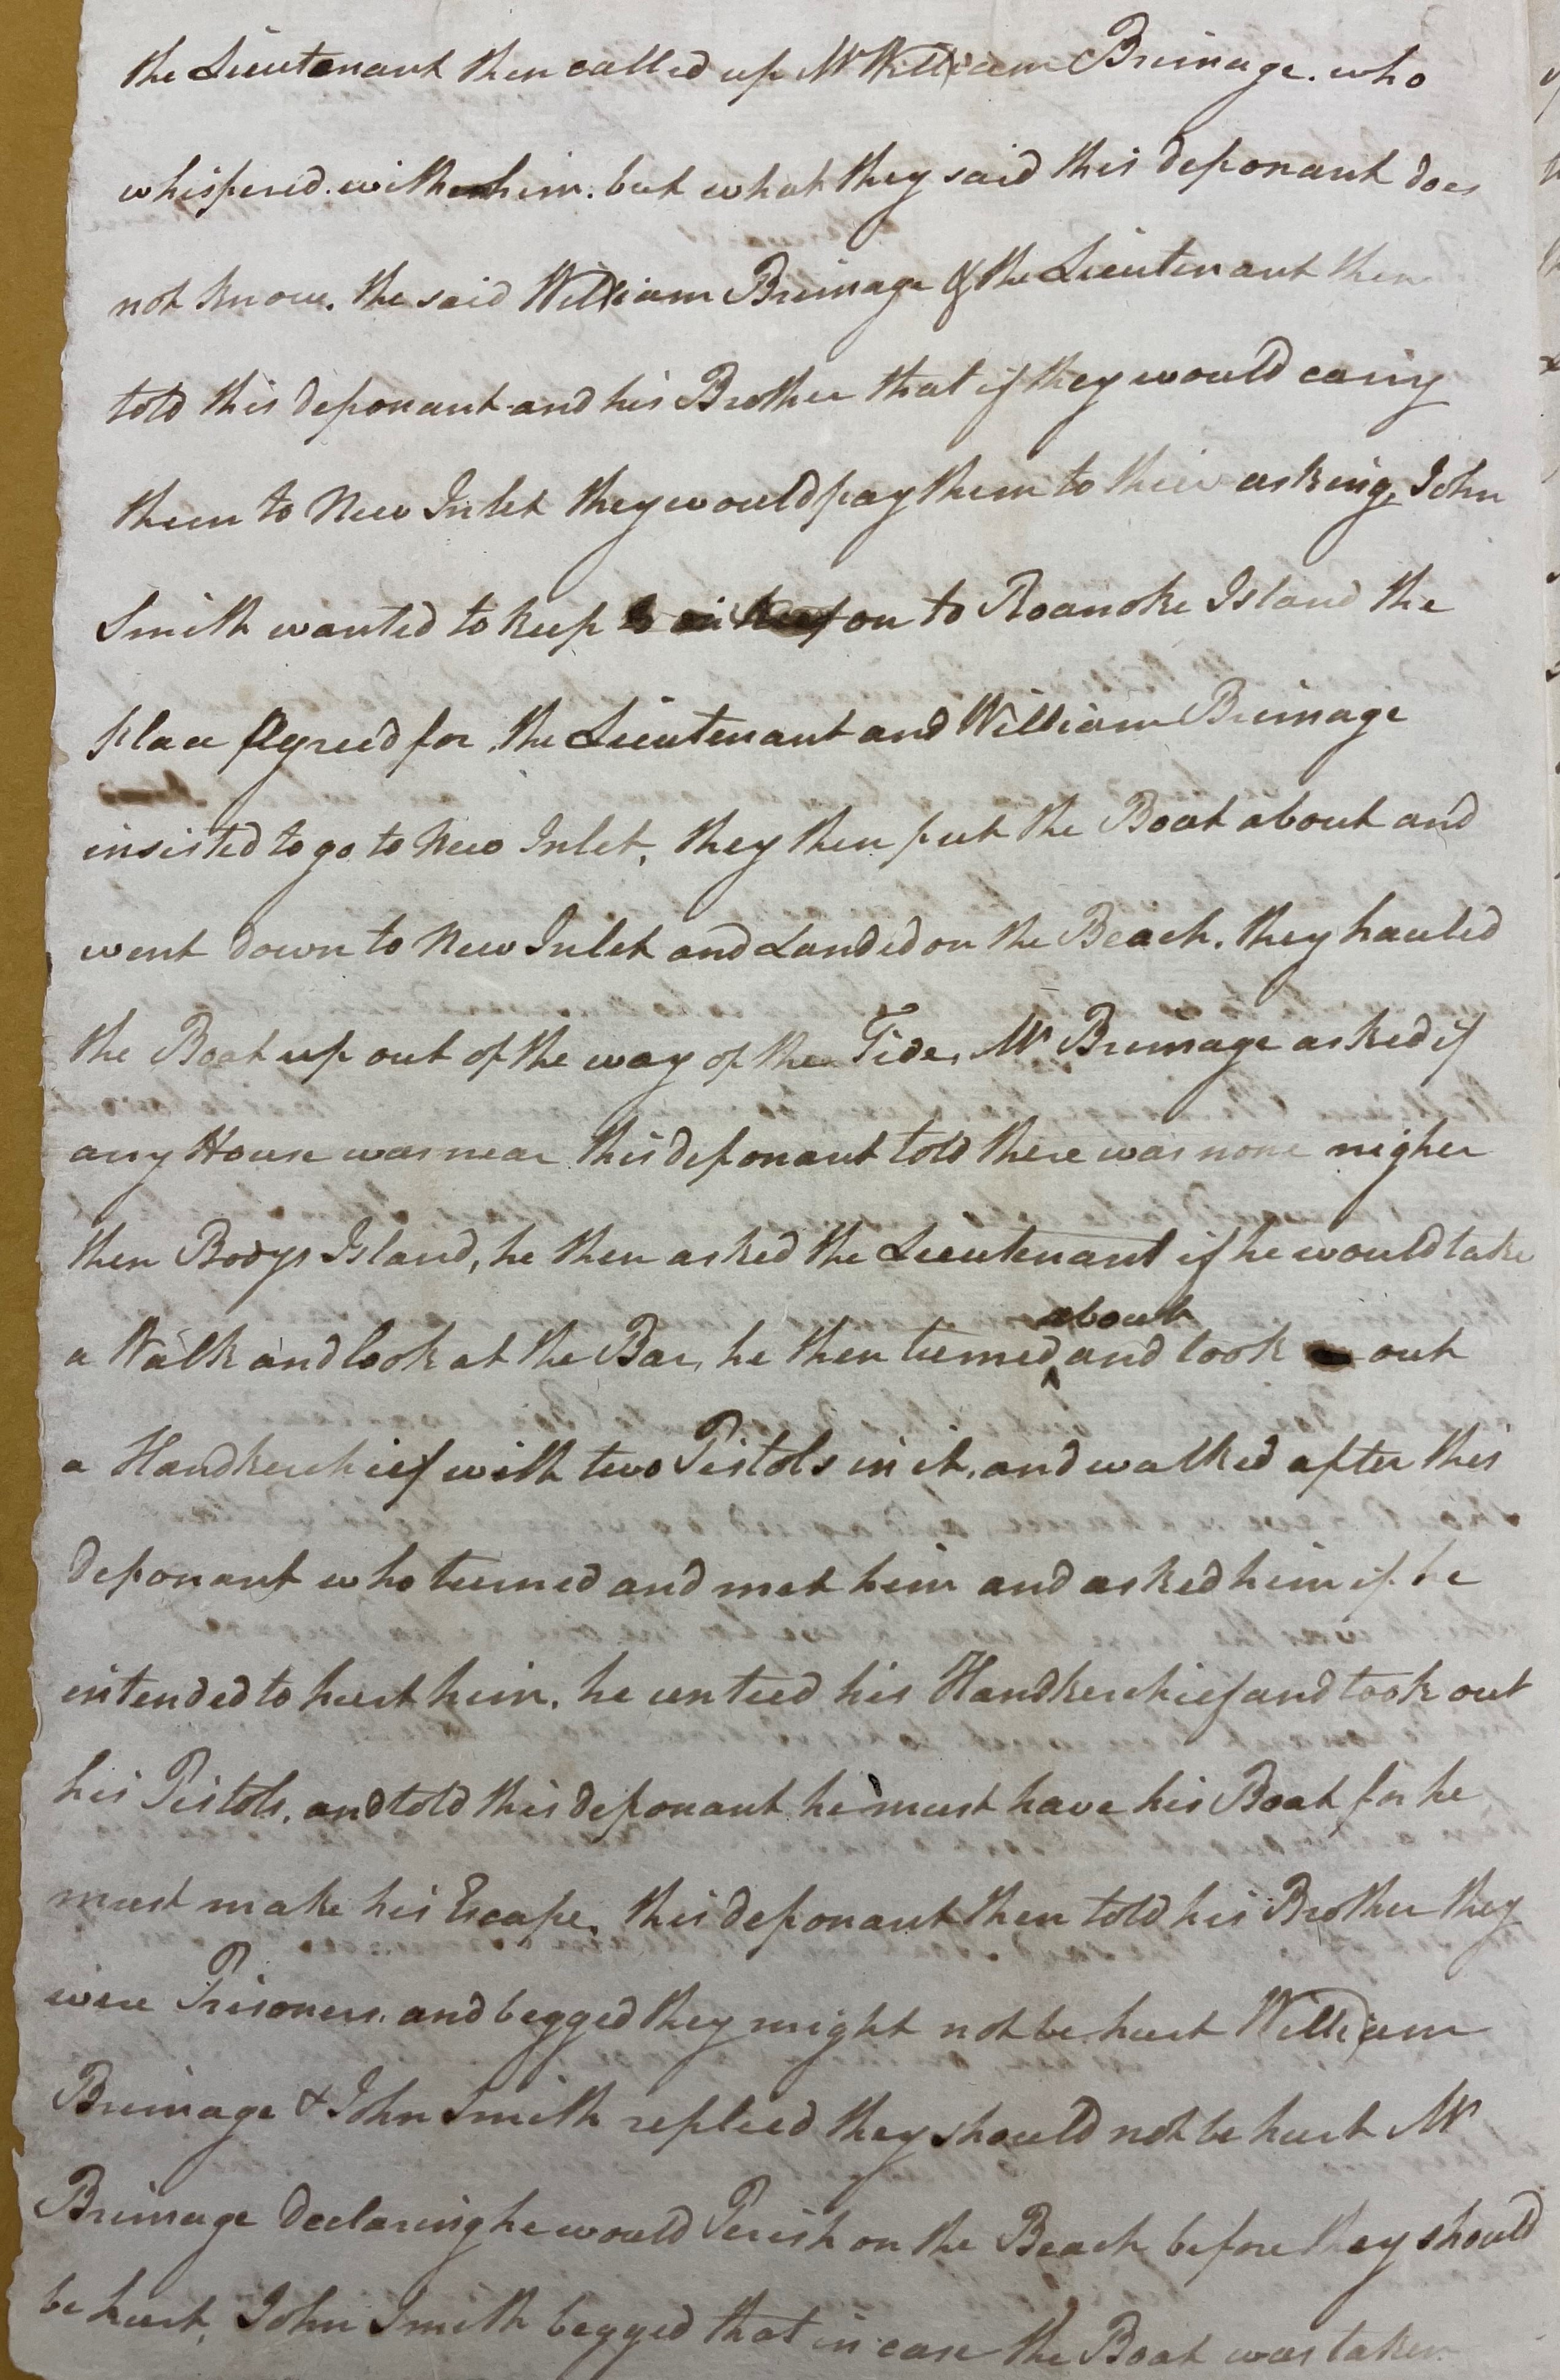 Deposition of Daniel Austin, 30 July 1777, page 2